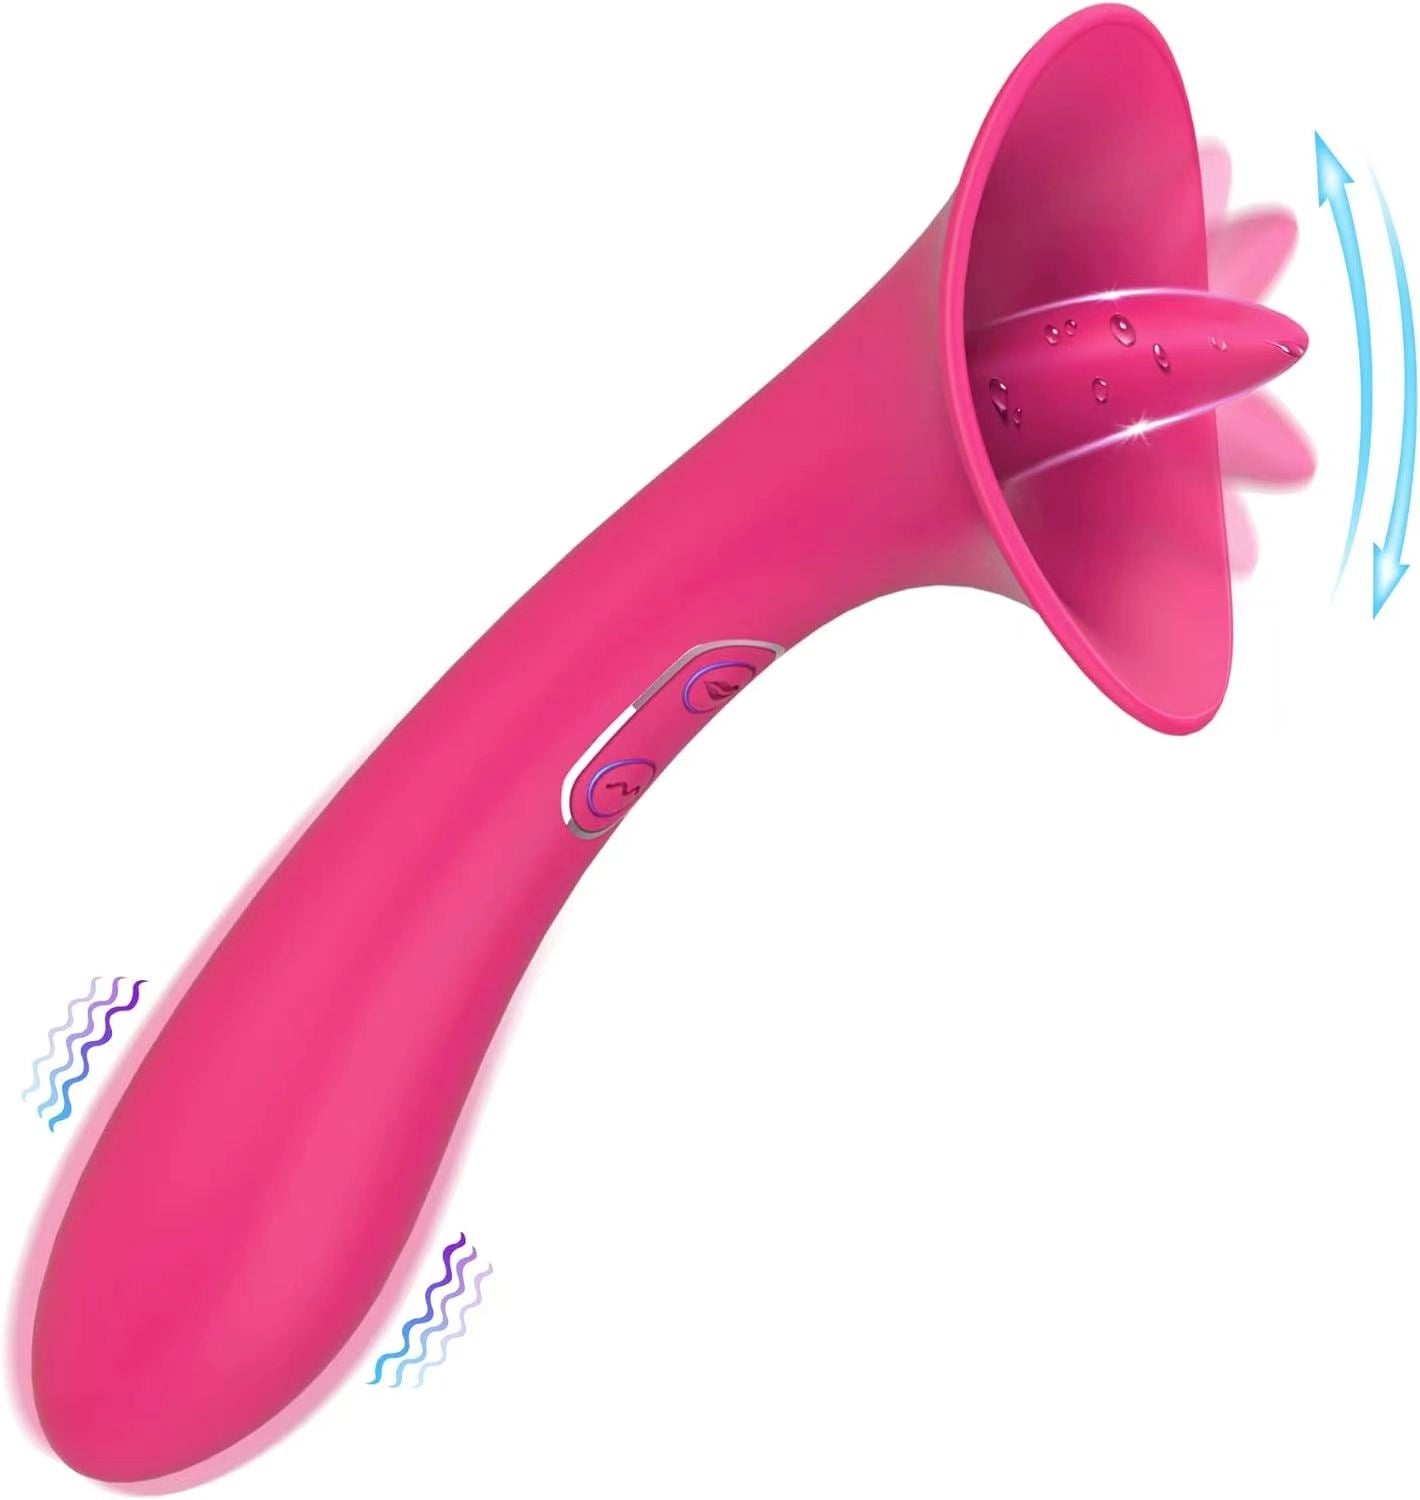 Clit Licking Tongue Vibrator With G Spot Stimulator